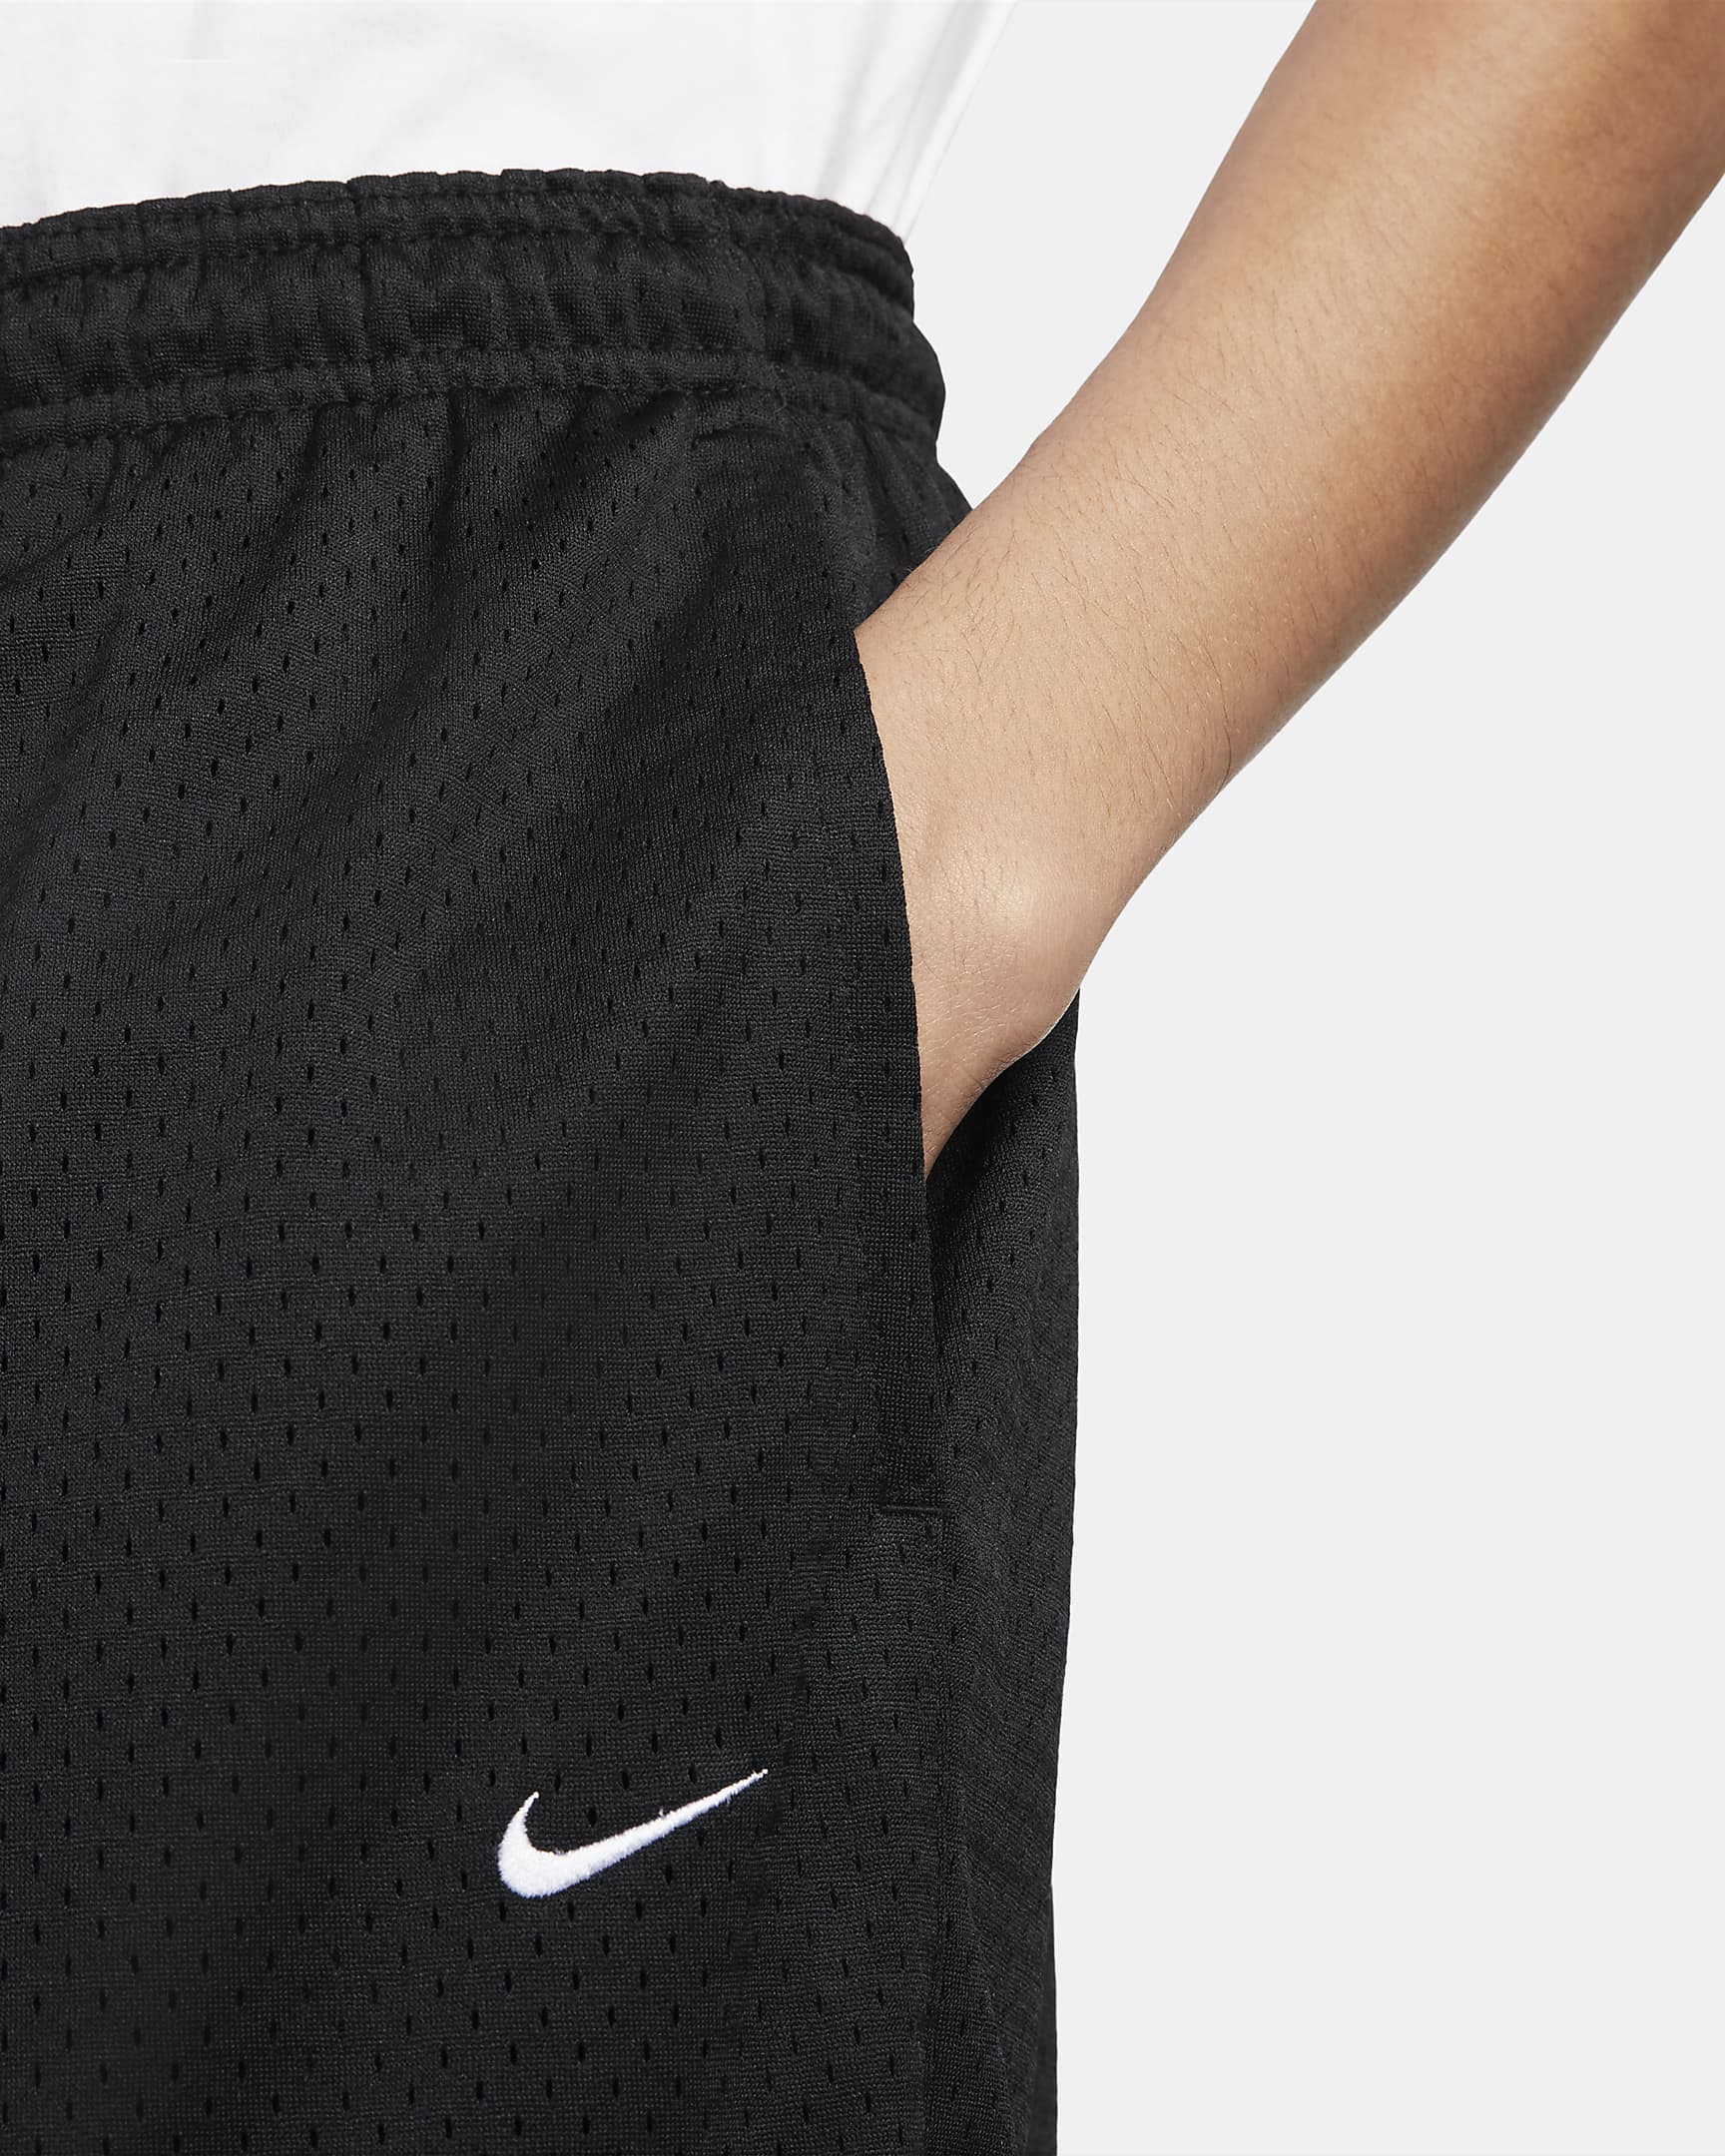 Nike Sportswear Authentics Men's Mesh Shorts. Nike AT